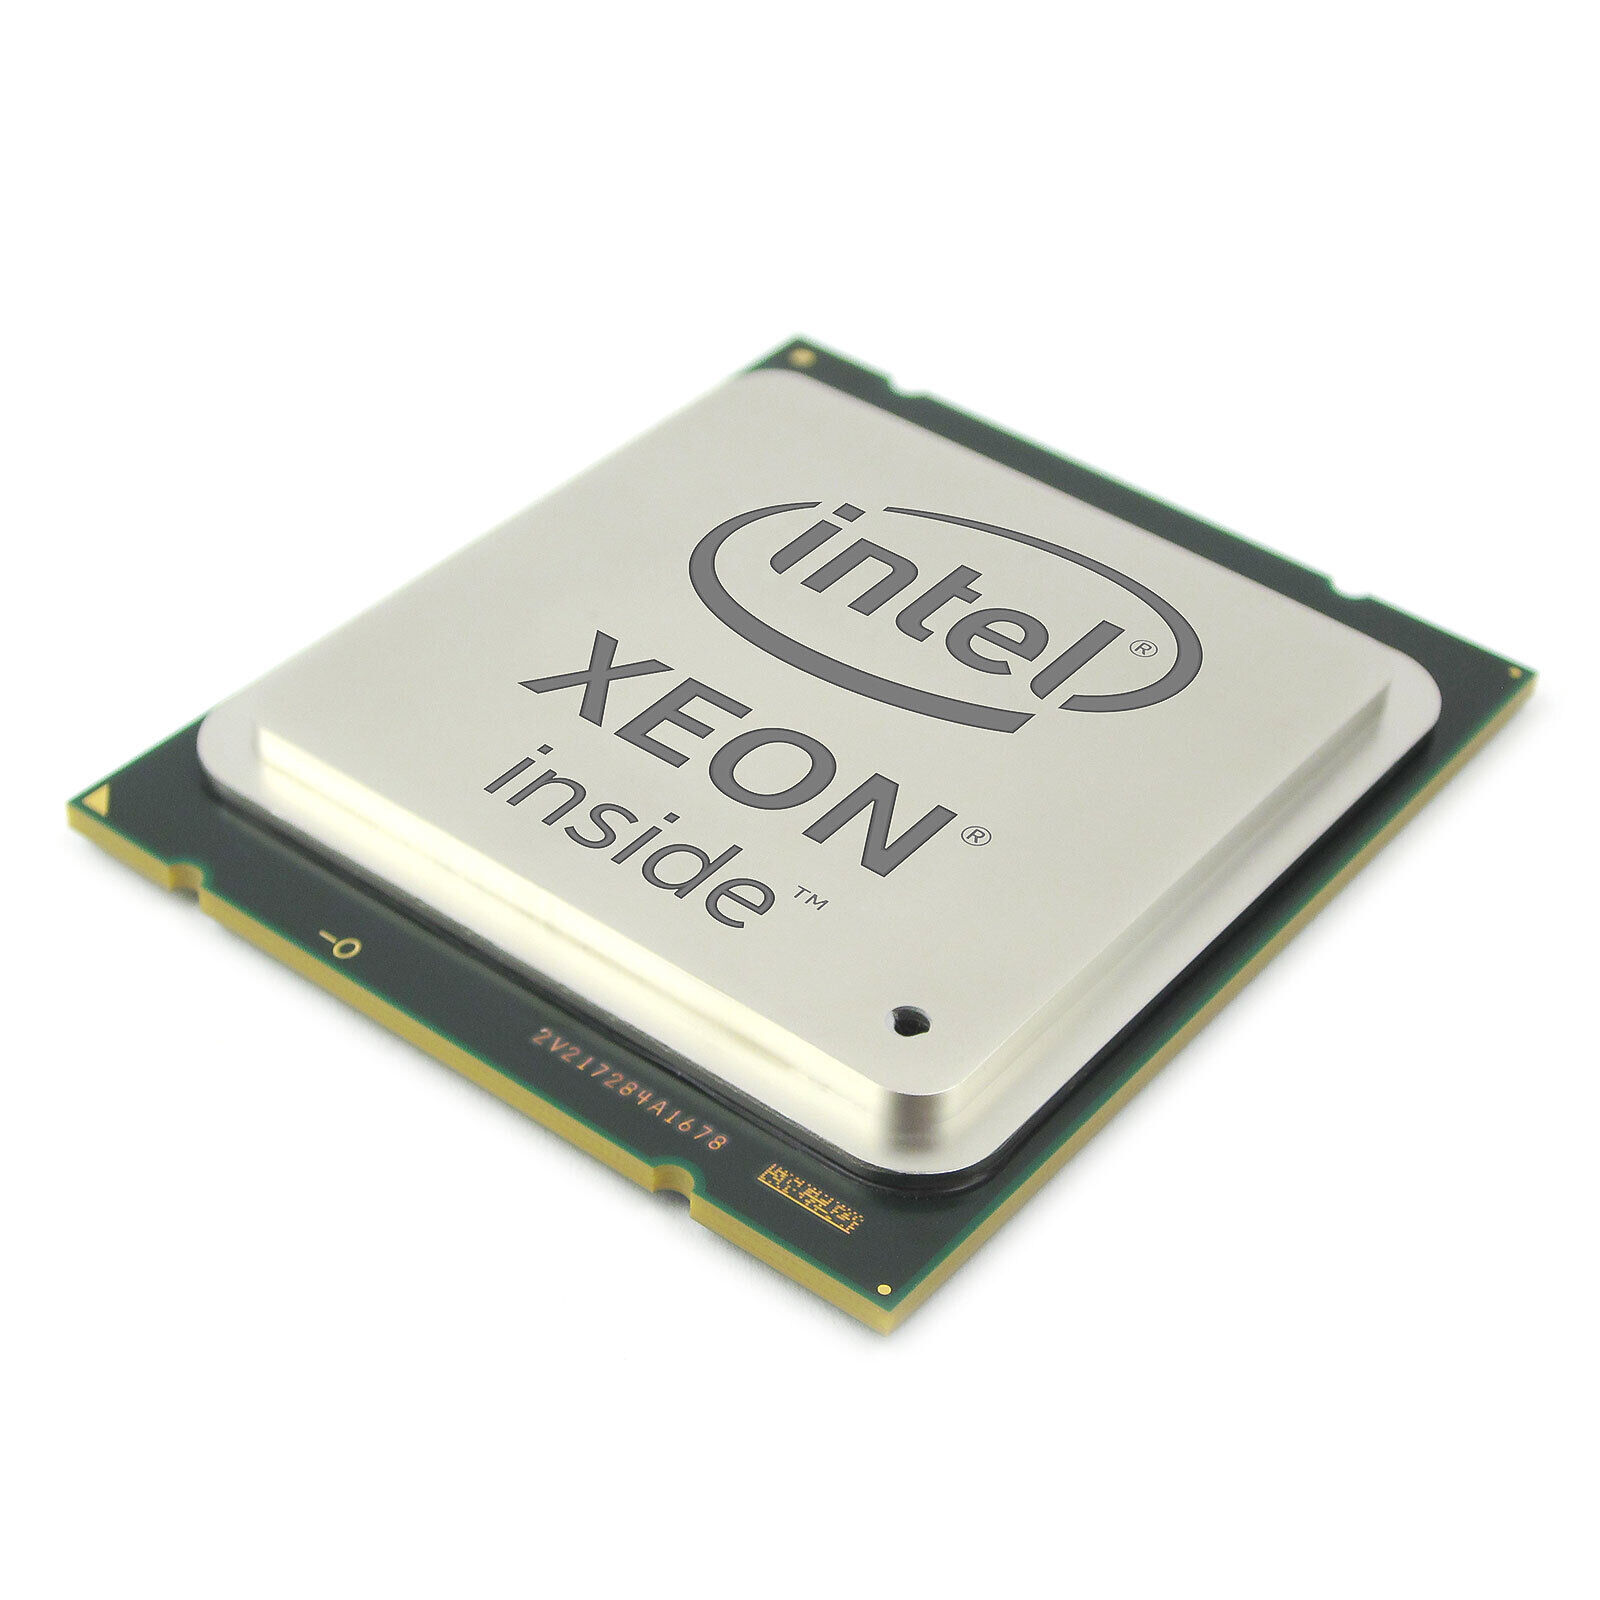 Intel Xeon E5520 2.26GHz Quad Core LGA 1366 / Socket B Processor SLBFD